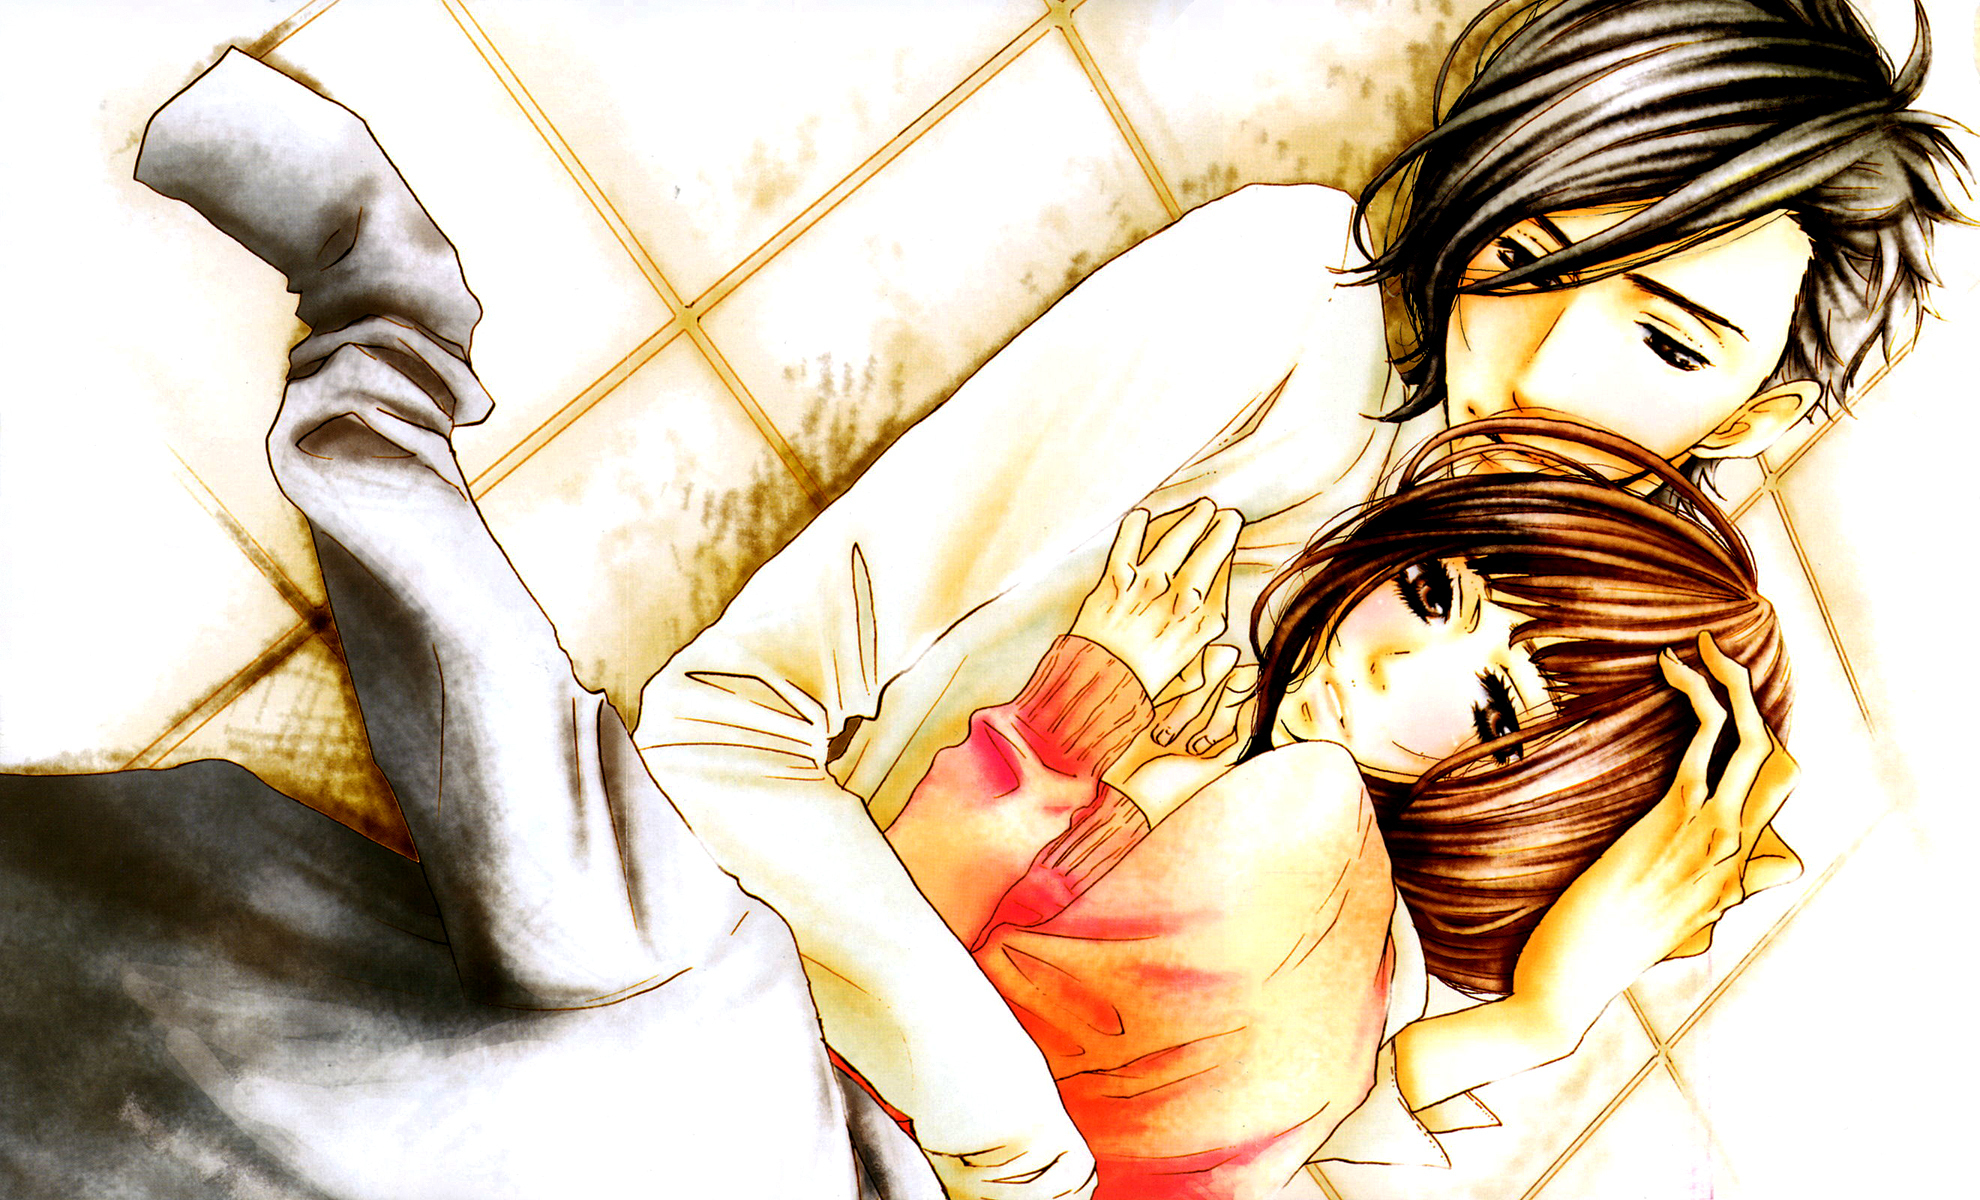 Anime characters Mei Tachibana and Yamato Kurosawa in a loving embrace from Say 'I Love You' series.